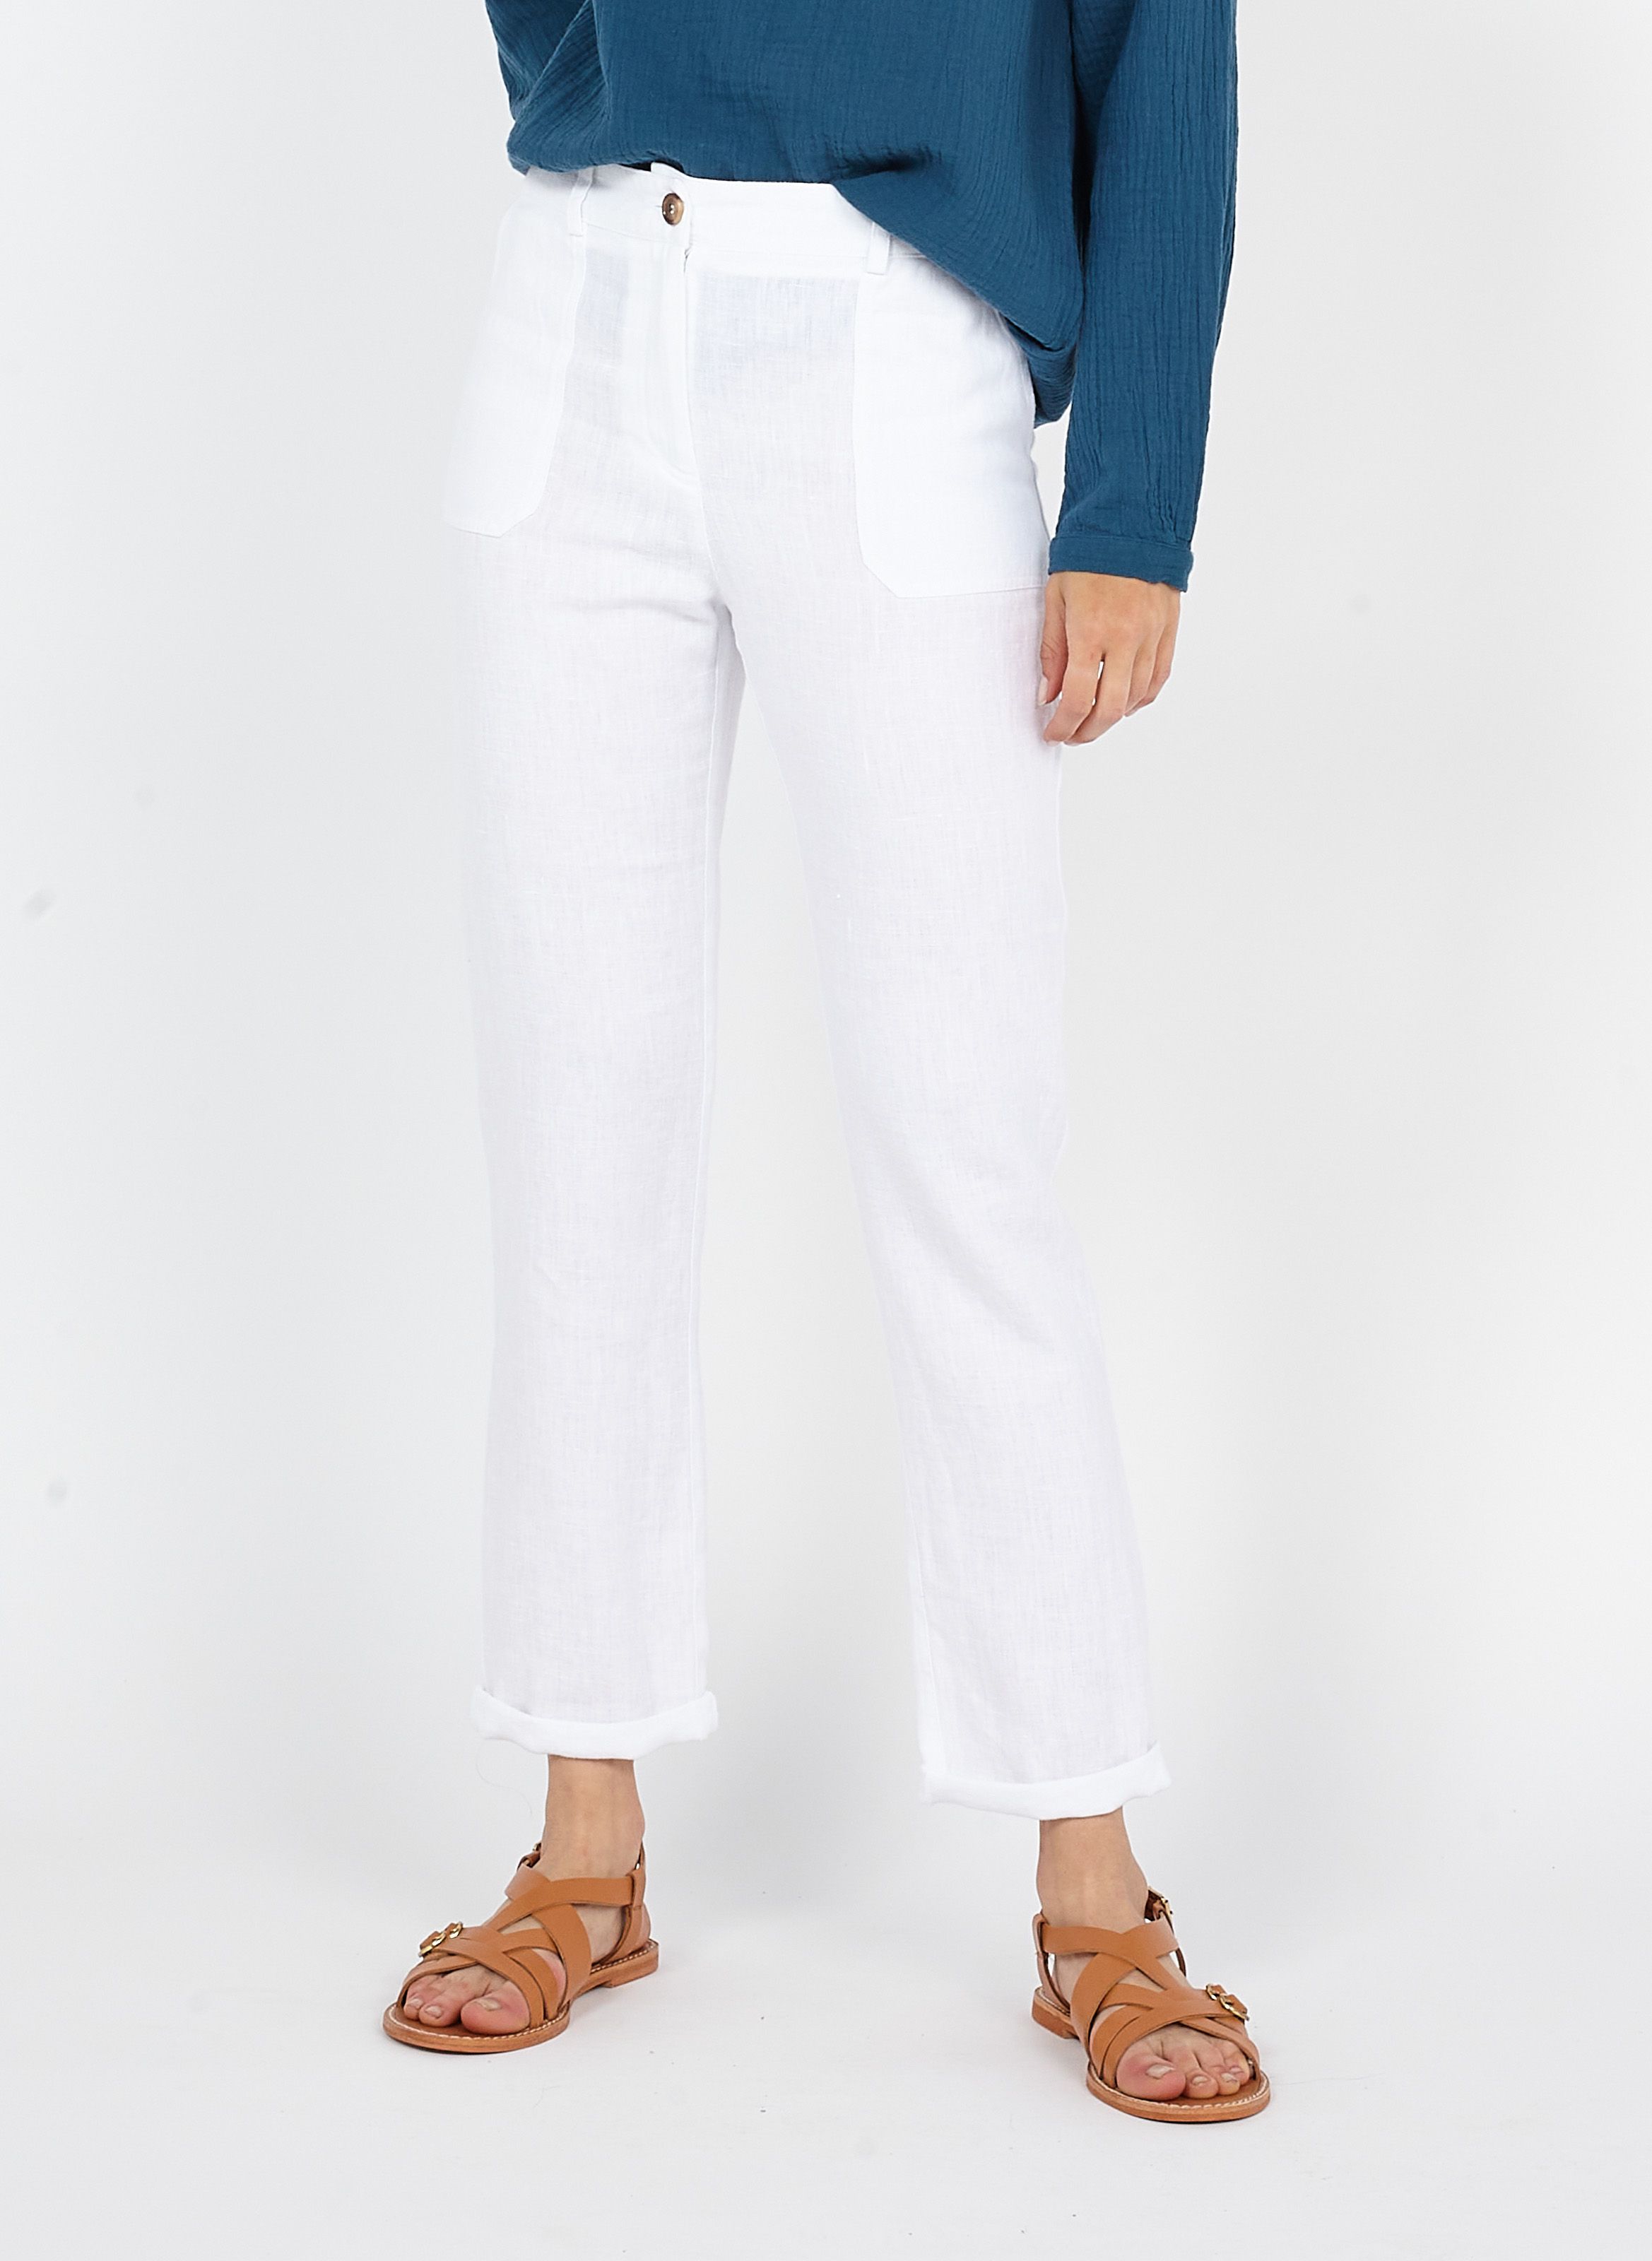 Orsay Pantalon en lin blanc cass\u00e9 style d\u00e9contract\u00e9 Mode Pantalons Pantalons en lin 